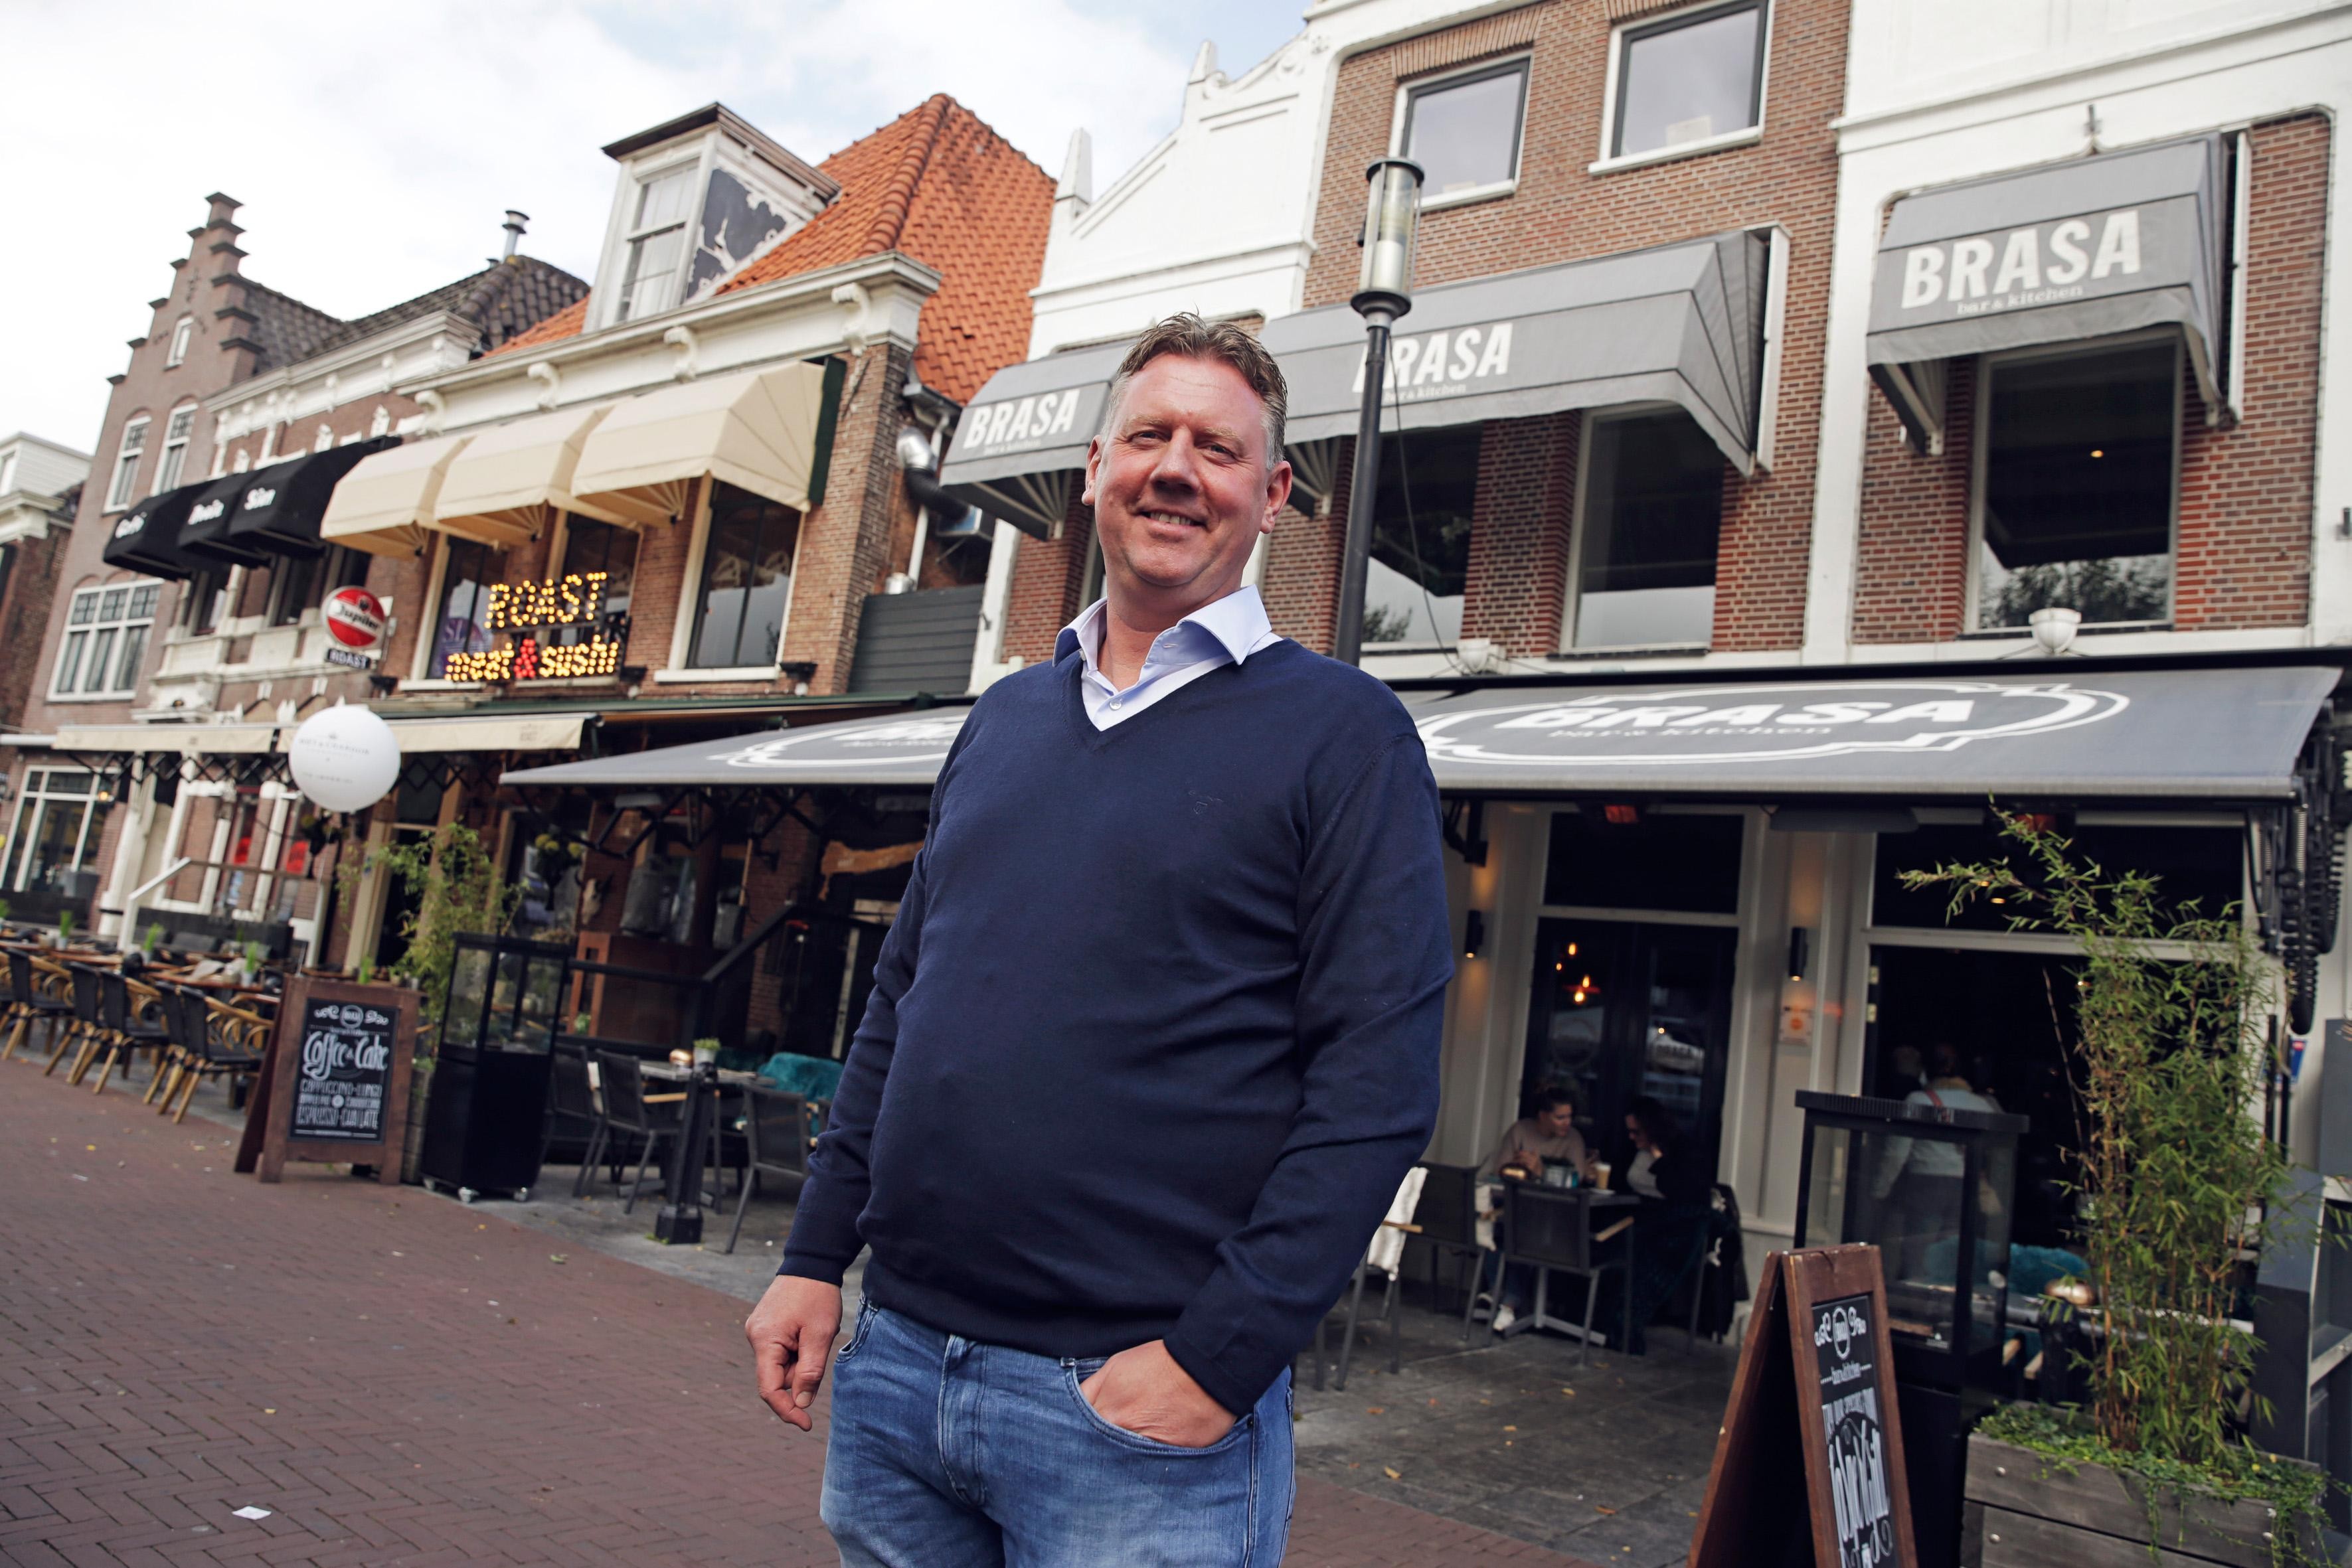 Brasa in Purmerend beste café van Noord-Holland - Noordhollands Dagblad